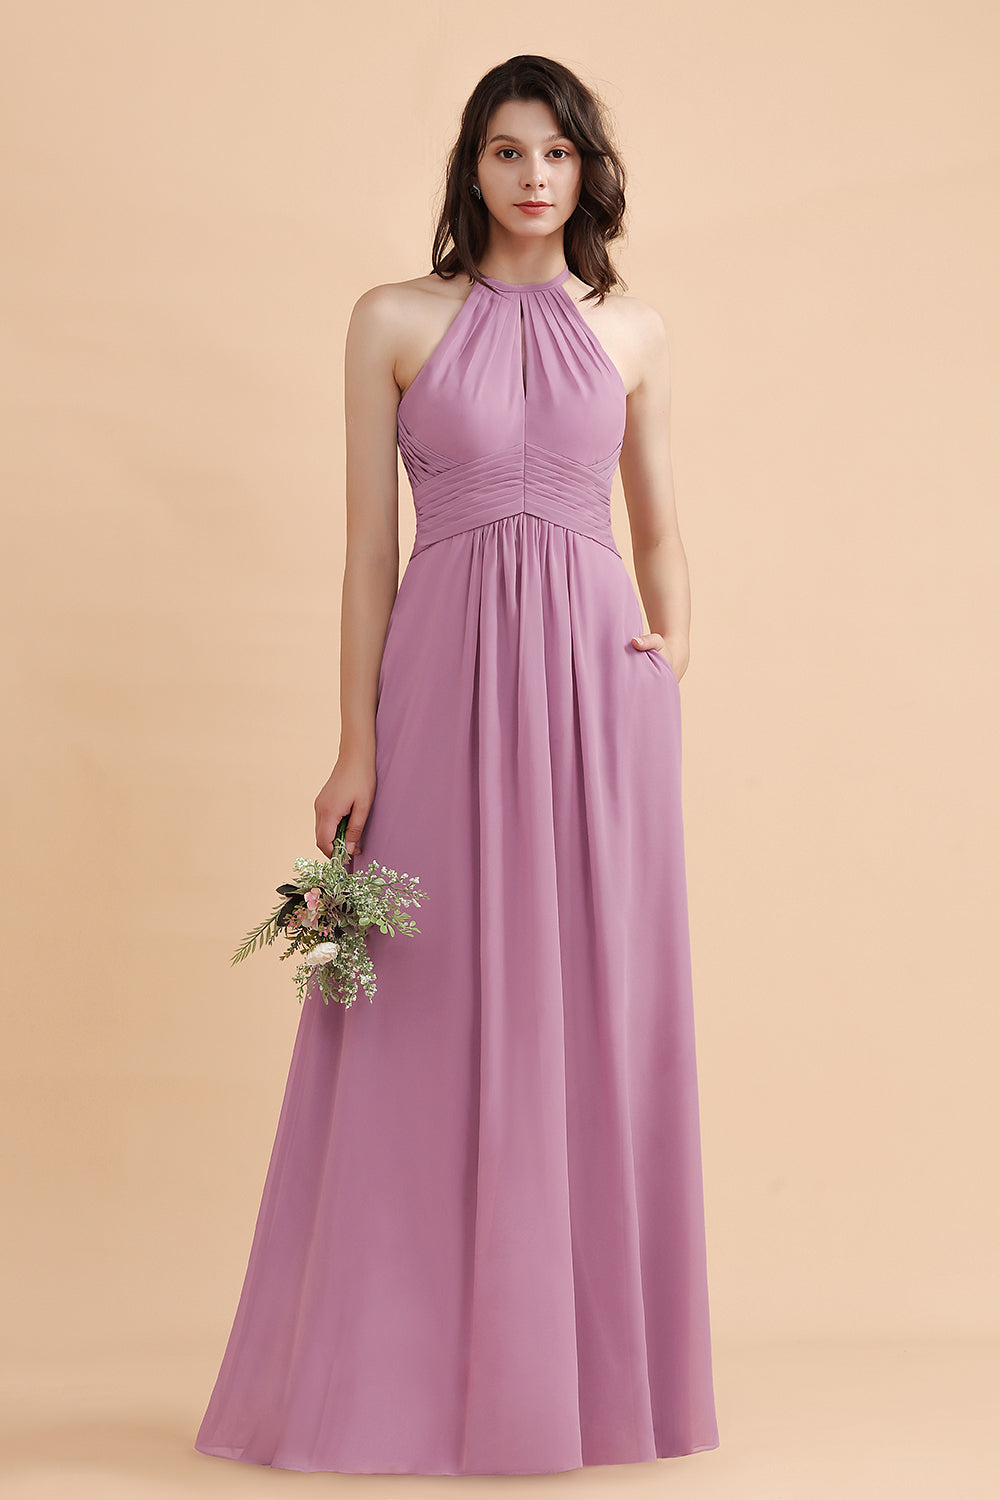 Load image into Gallery viewer, Elegant Jewel Wisteria Chiffon Ruffles Bridesmaid Dress with Pockets On sale-27dress
